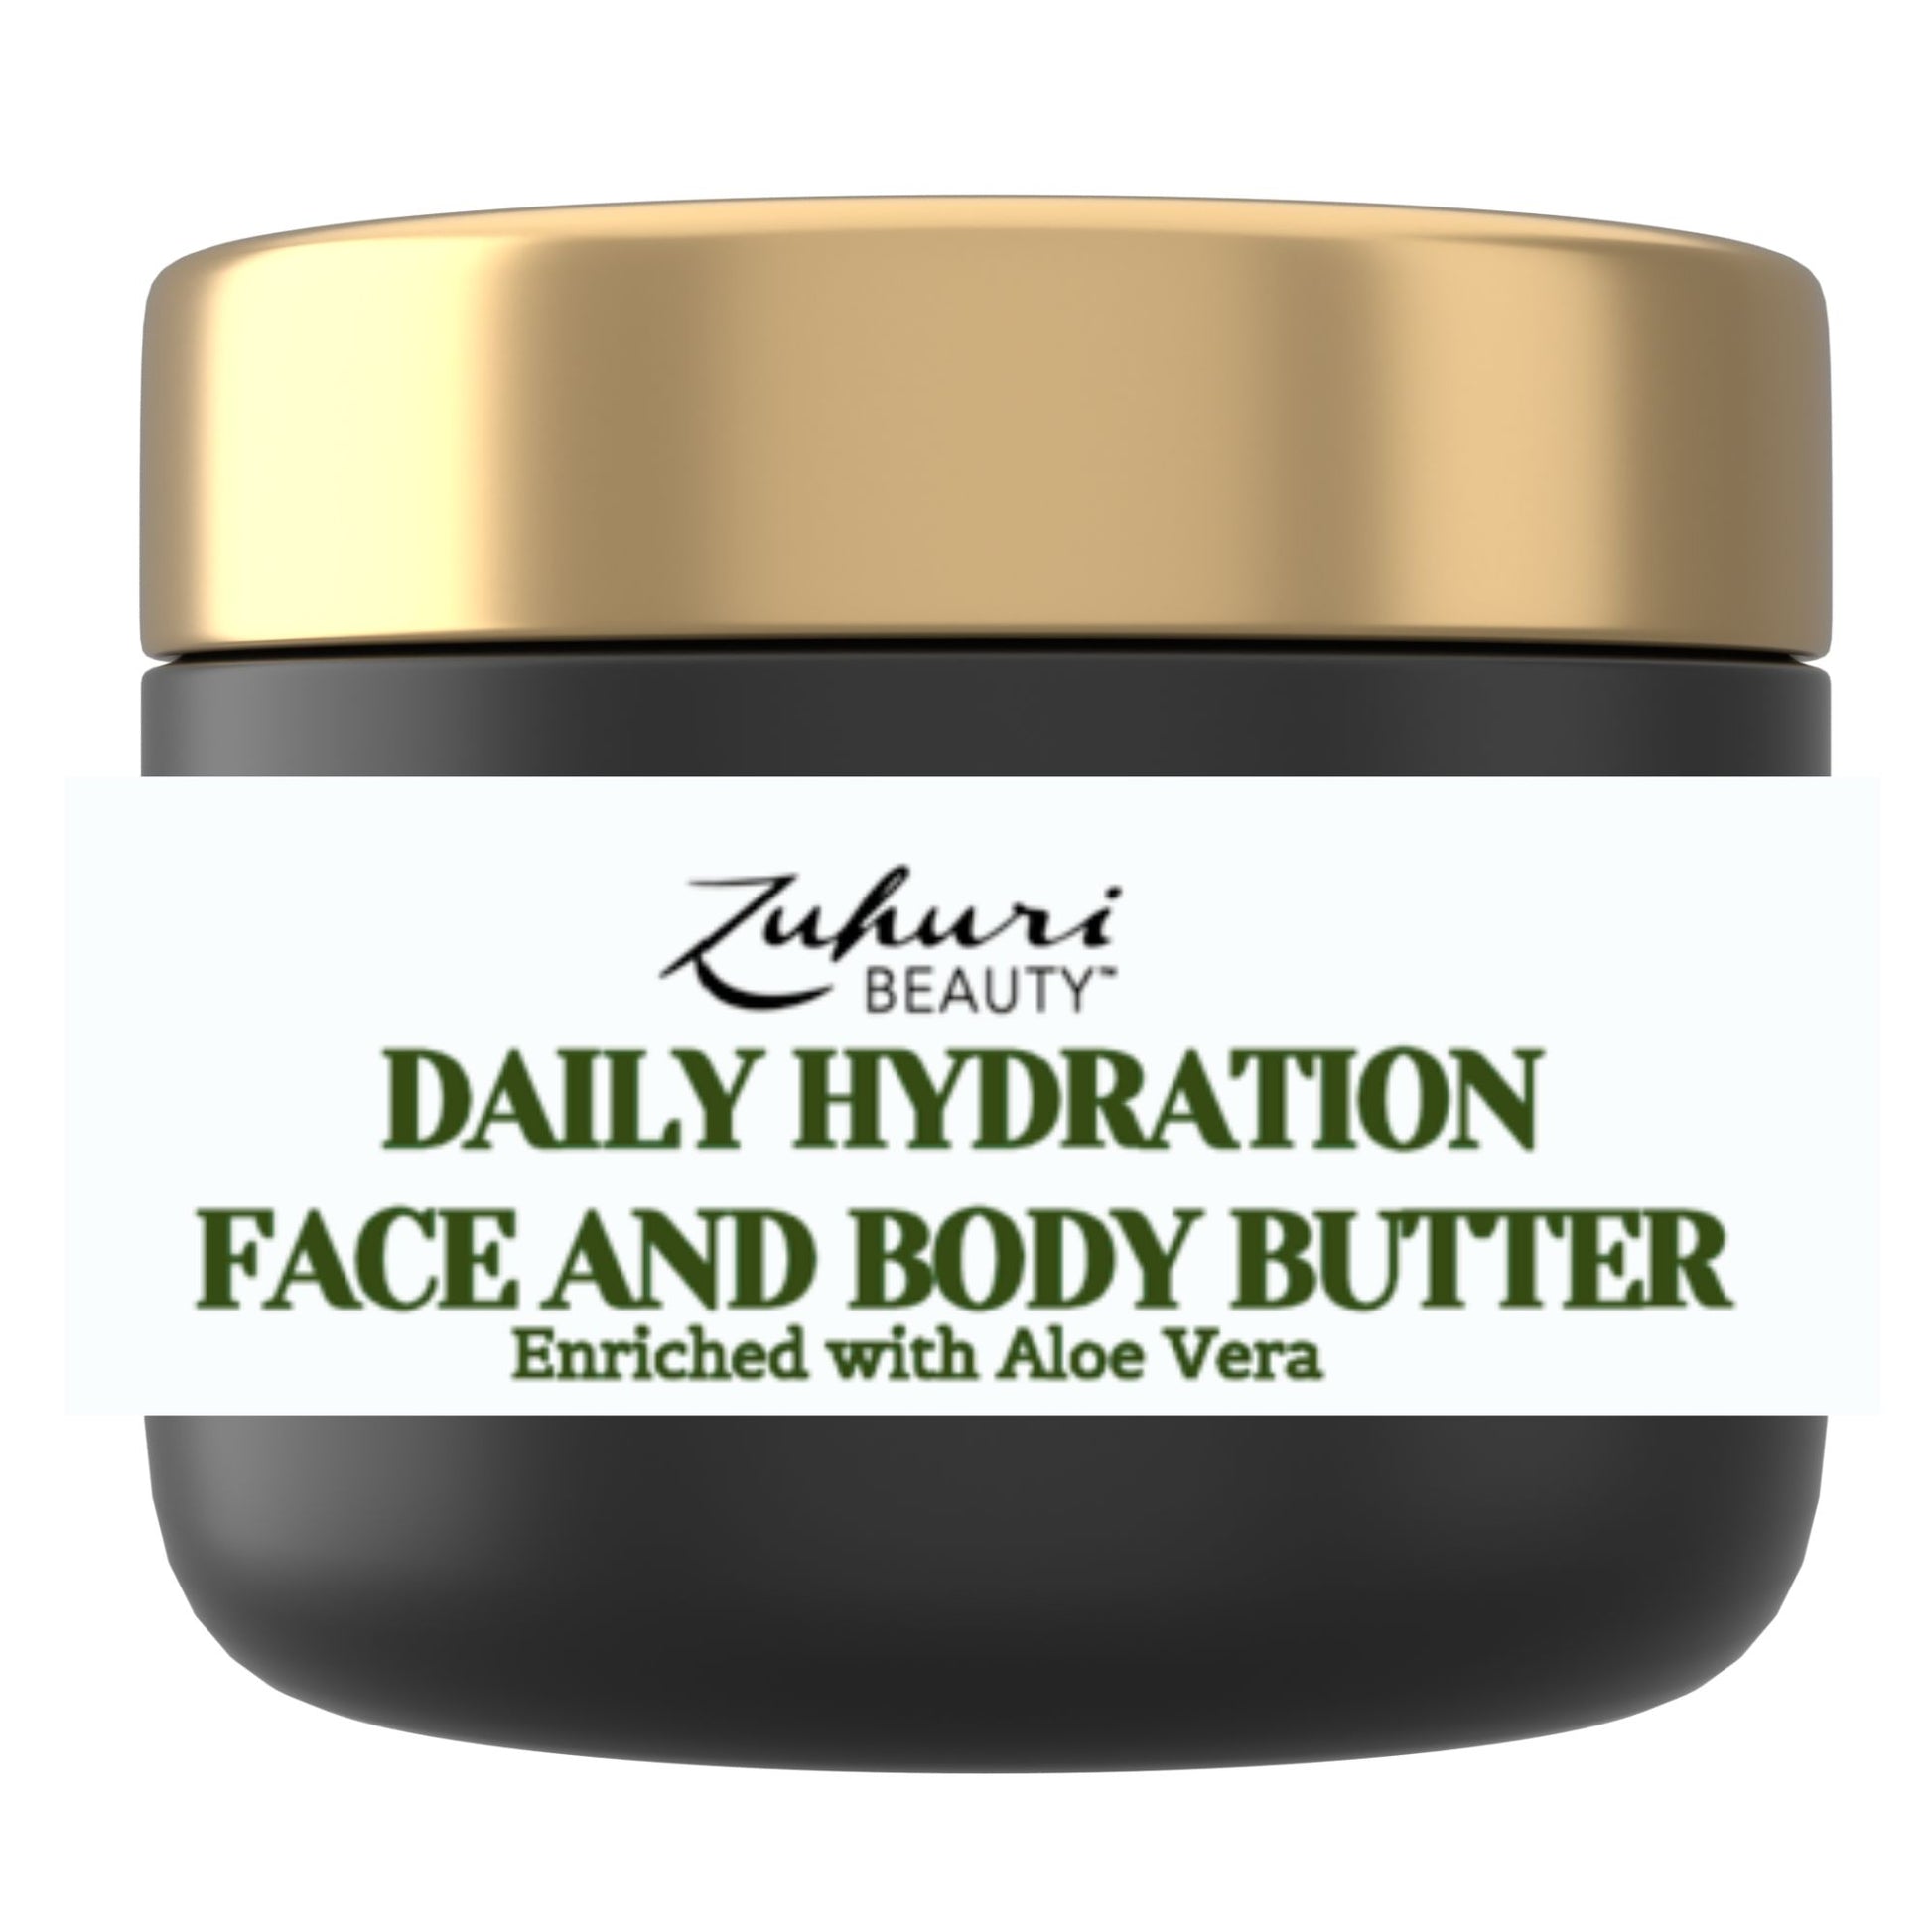 Zuhuri Beauty Daily Hydration, Zuhuri Beauty Dry Skin Products, Aloe Vera Skin Care, Zuhuri Beauty Daily Hydration Face and Body Butter, Zuhuri Beauty Butter